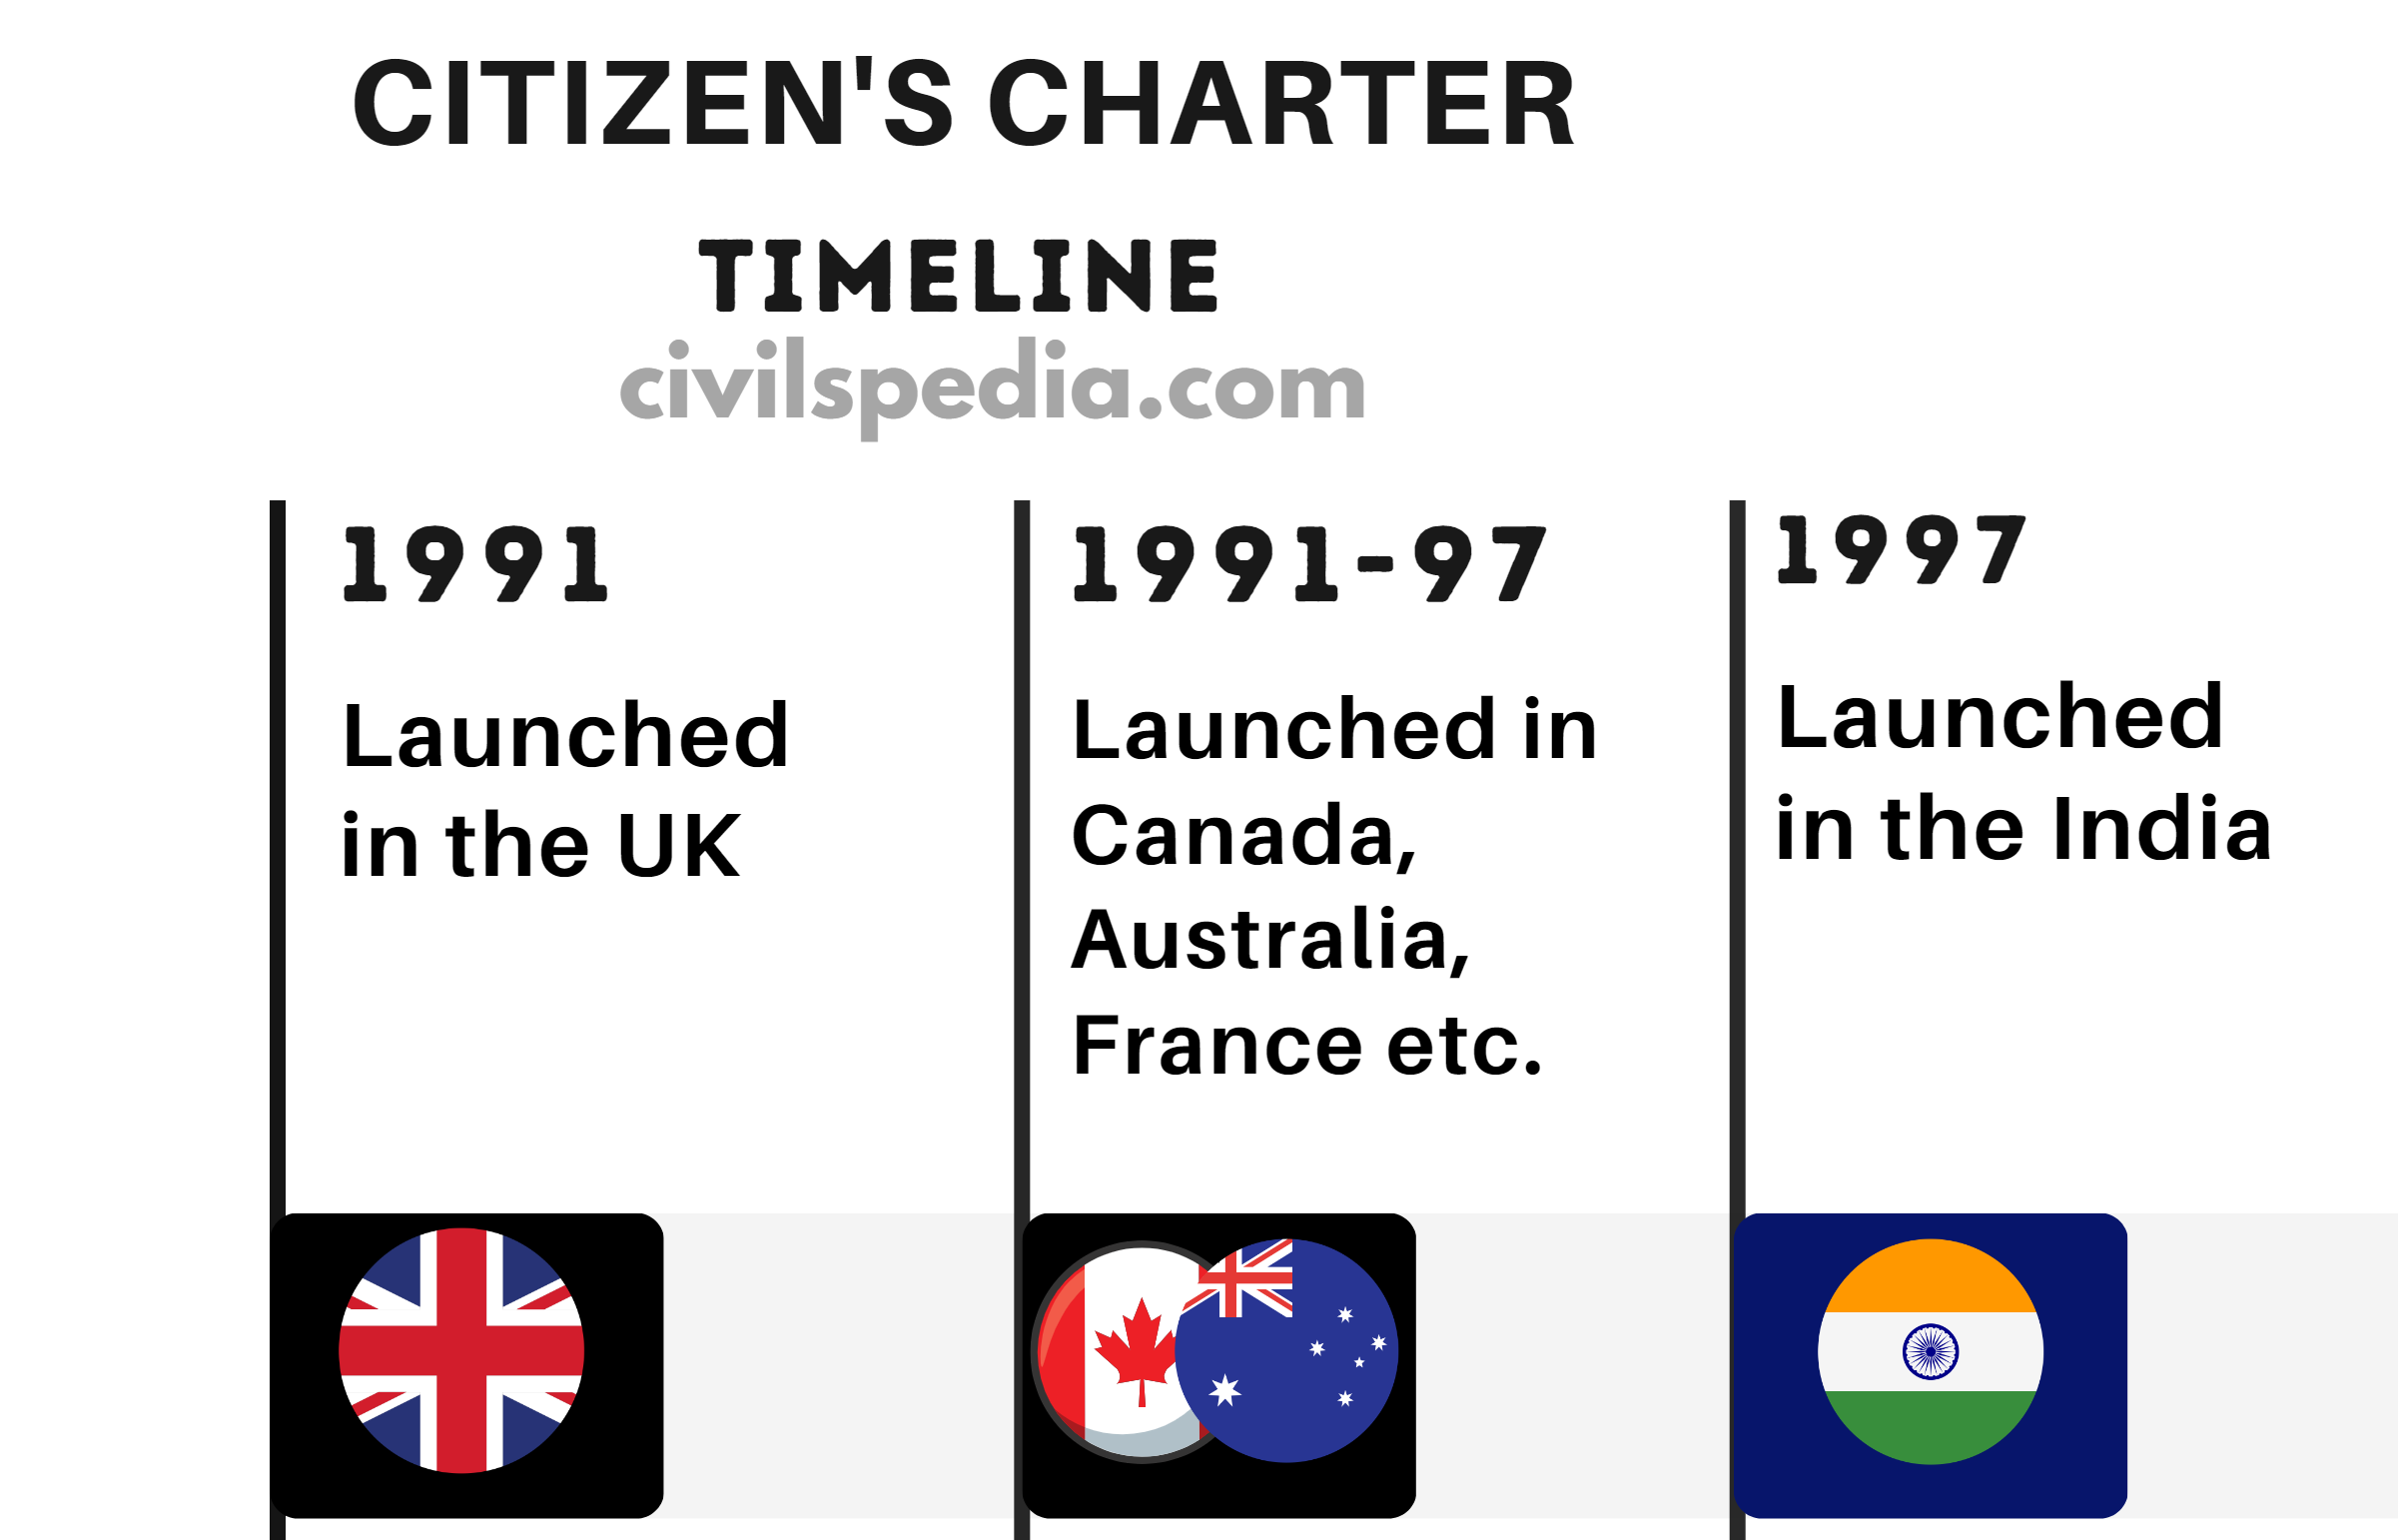 Citizen's Charter - Concept, Benefits and Shortfalls